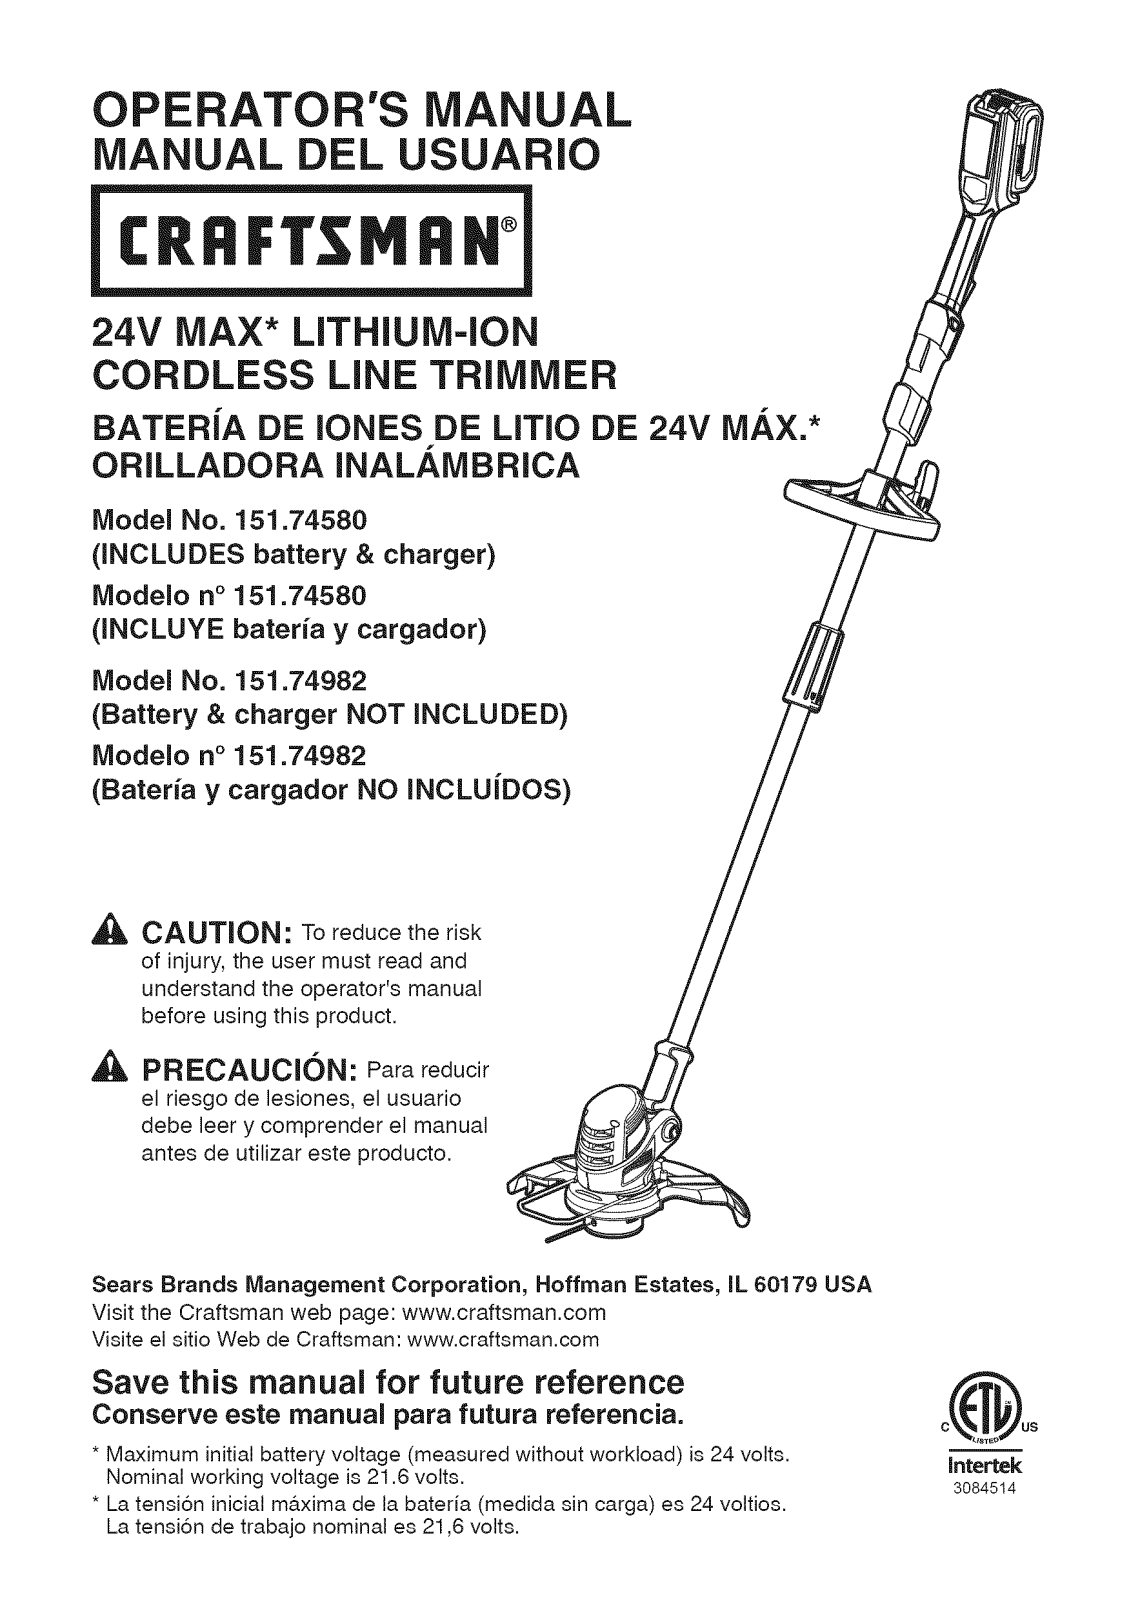 Craftsman 15174580, 15174982 Owner’s Manual